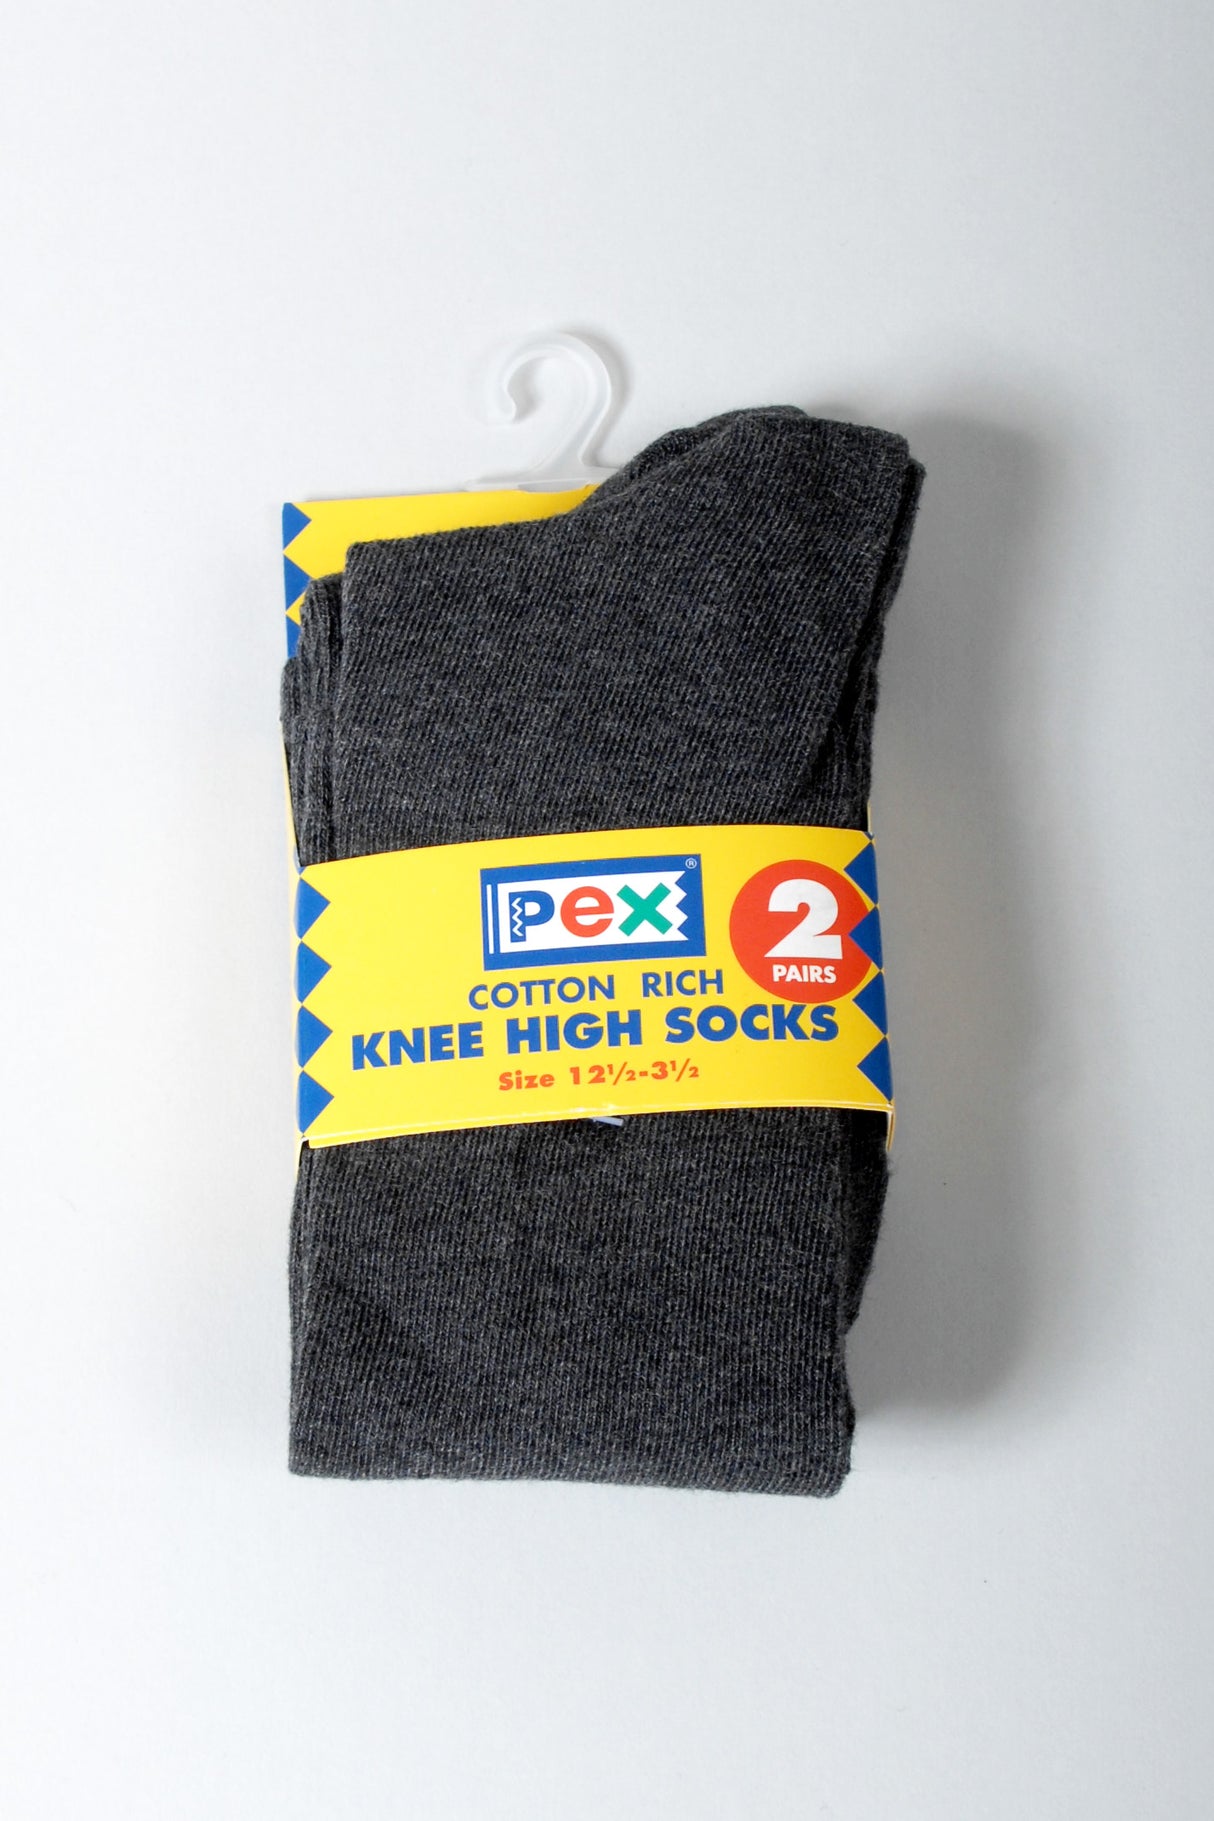 Grey Knee High Socks